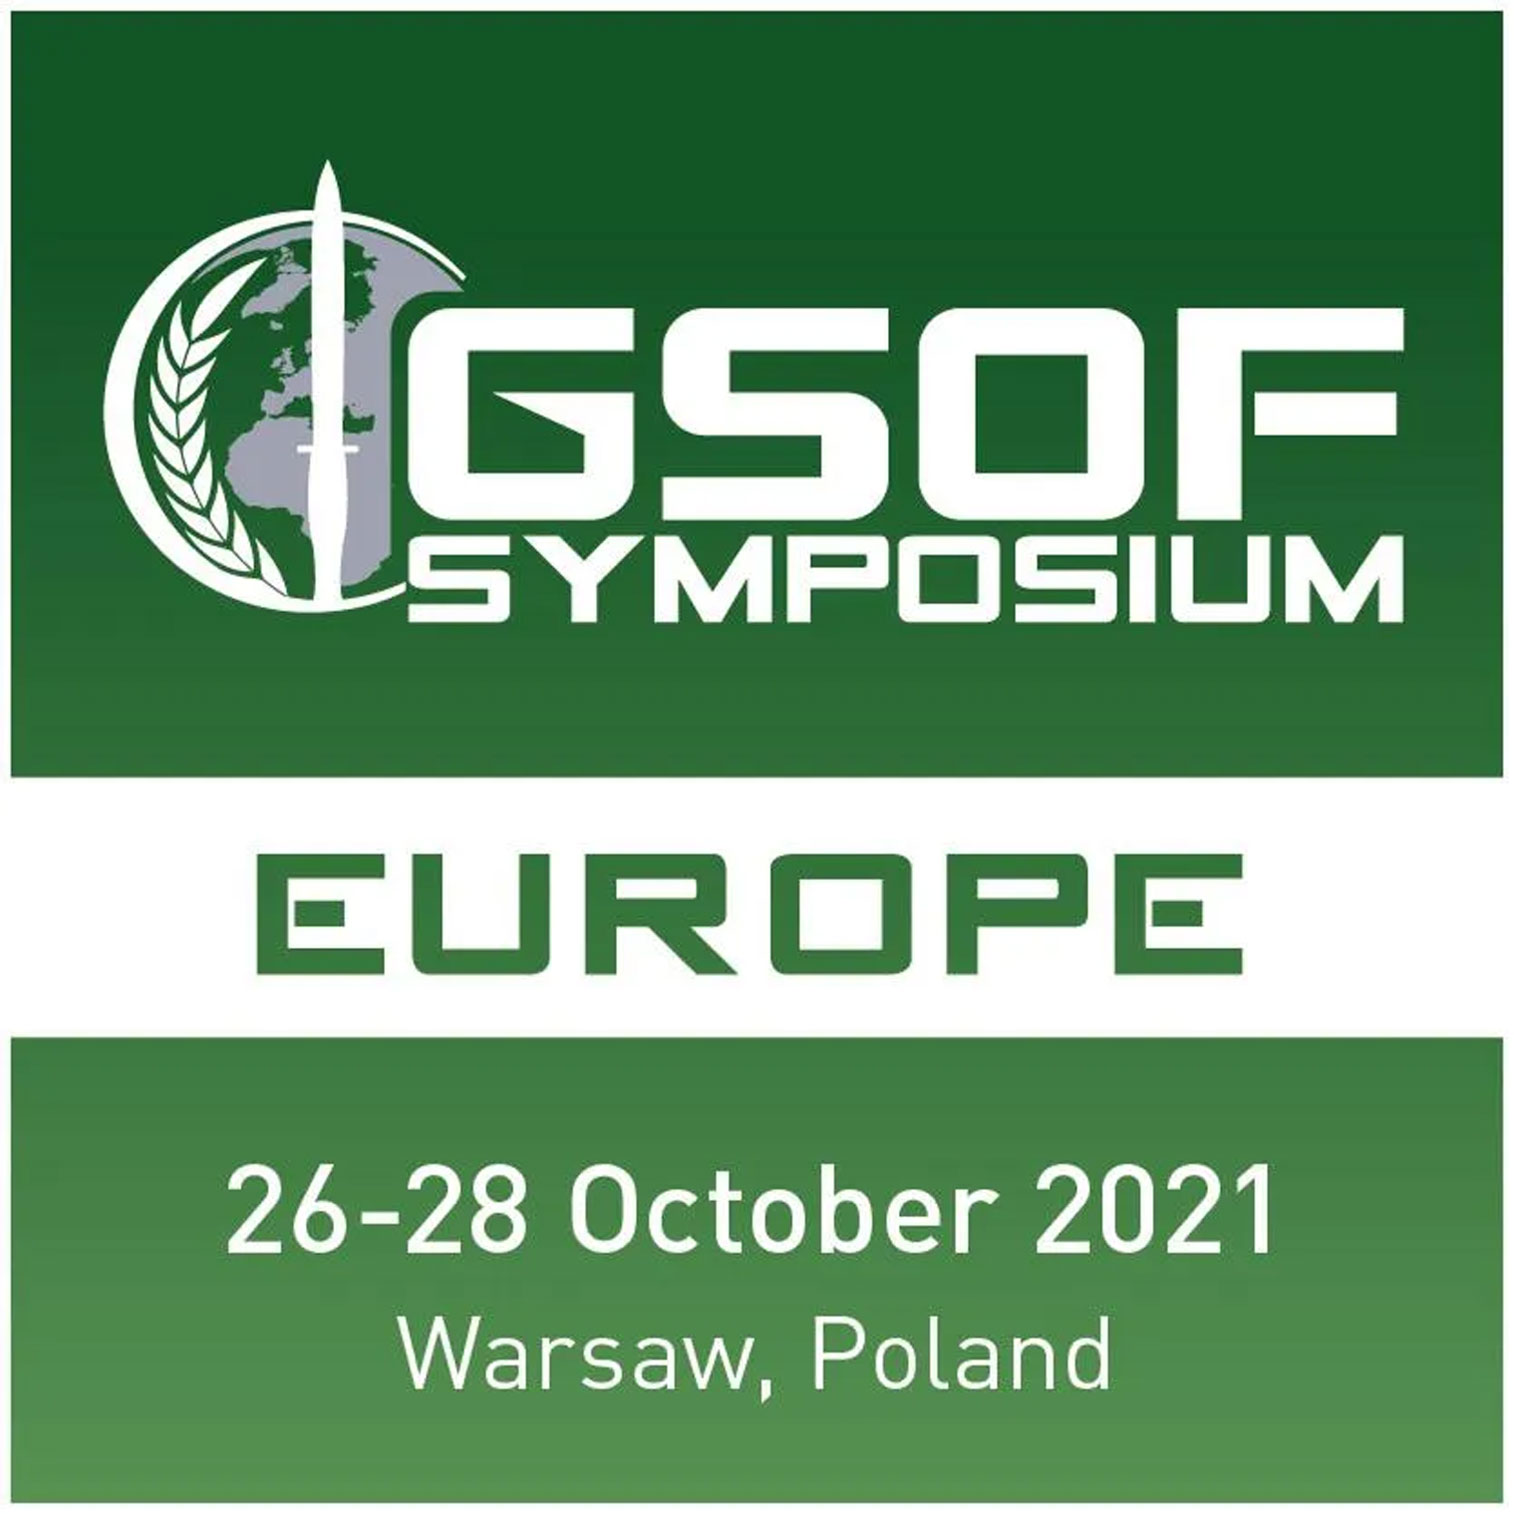 Preligens participera au GSOF Symposium Europe 2021